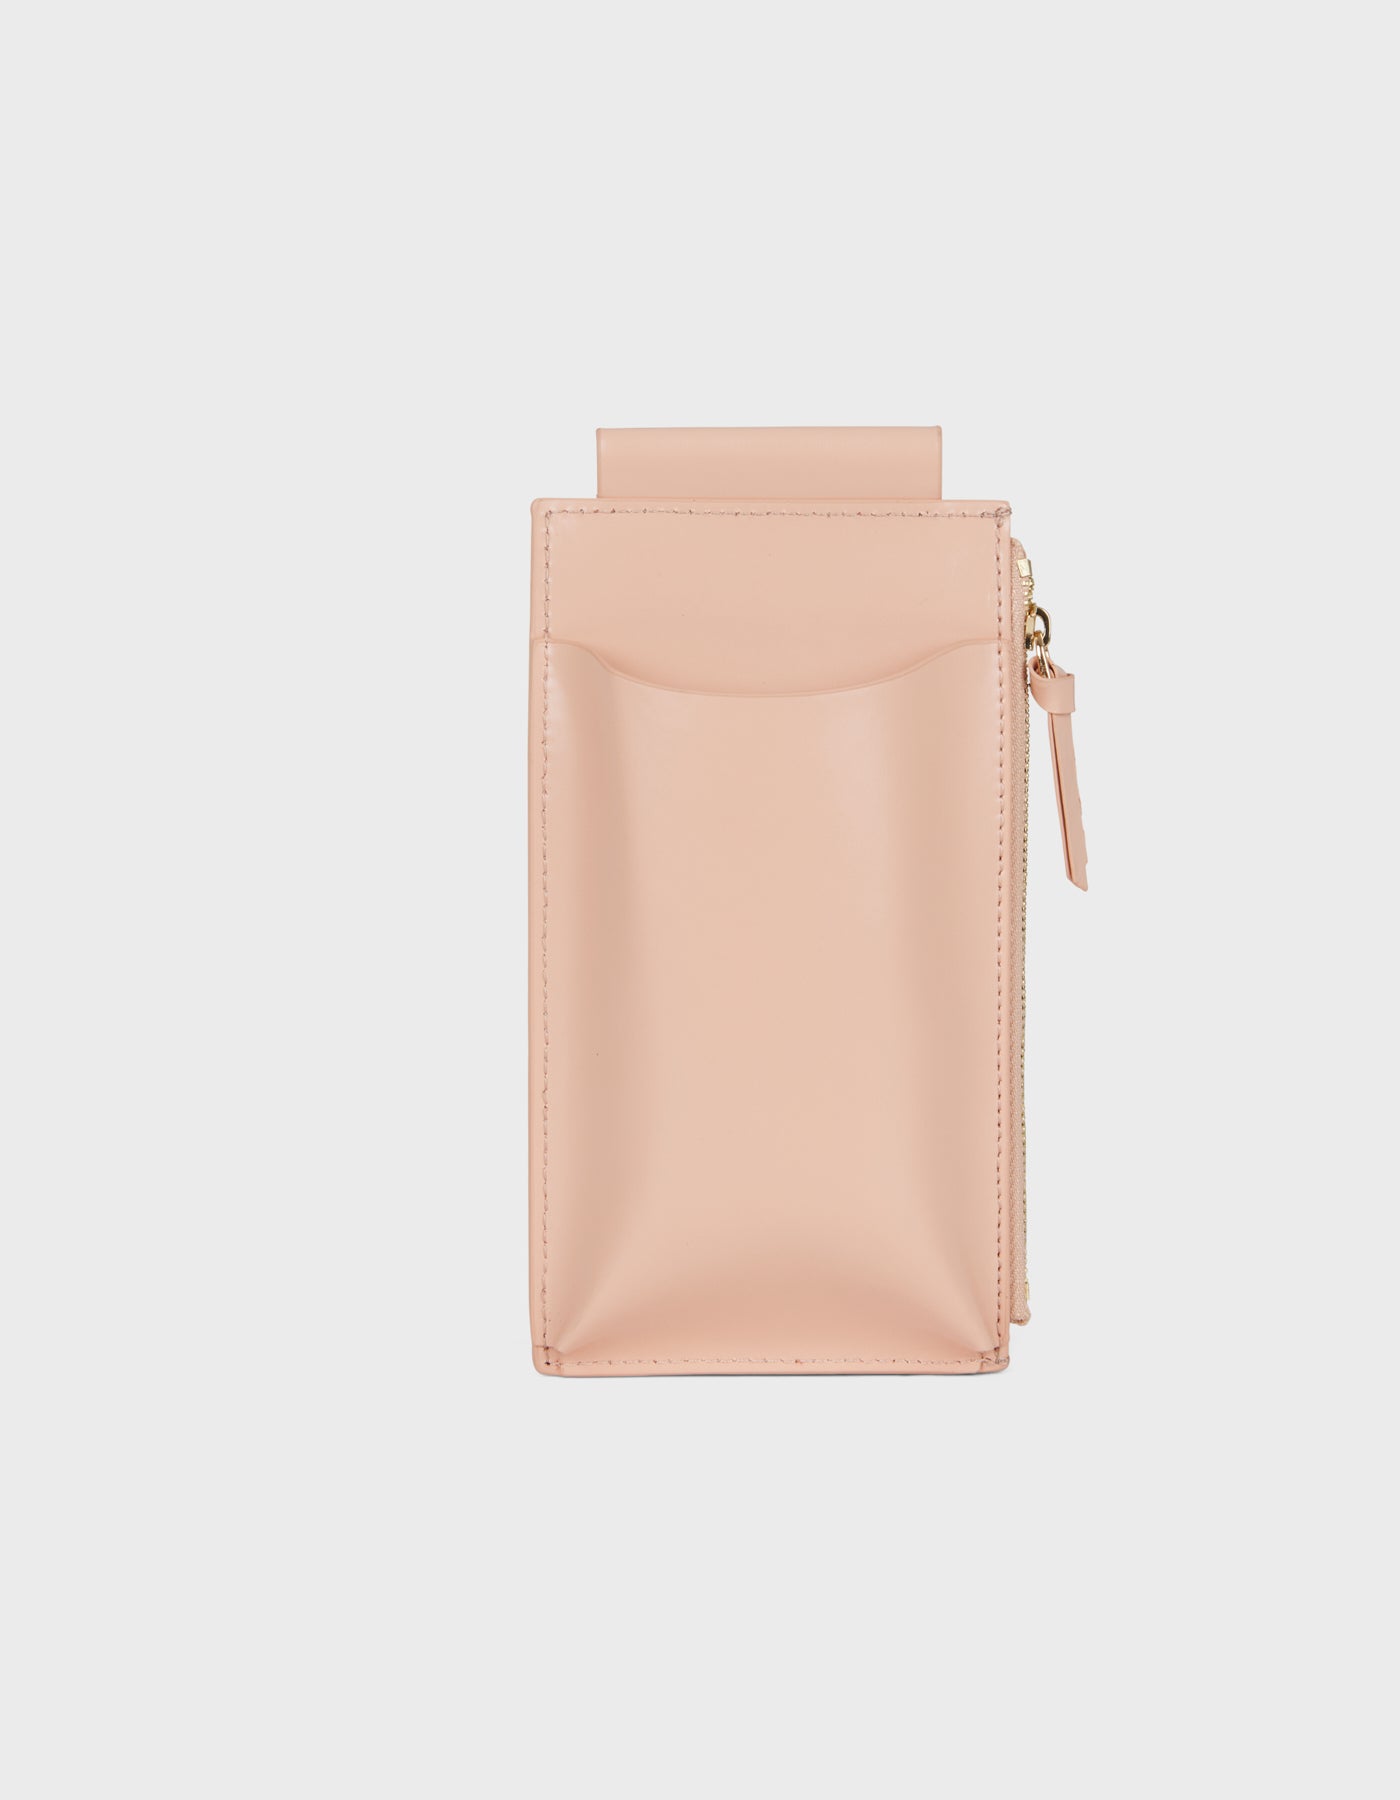 HiVa Atelier | Crossbody Phone Bag Peach Sand | Beautiful and Versatile